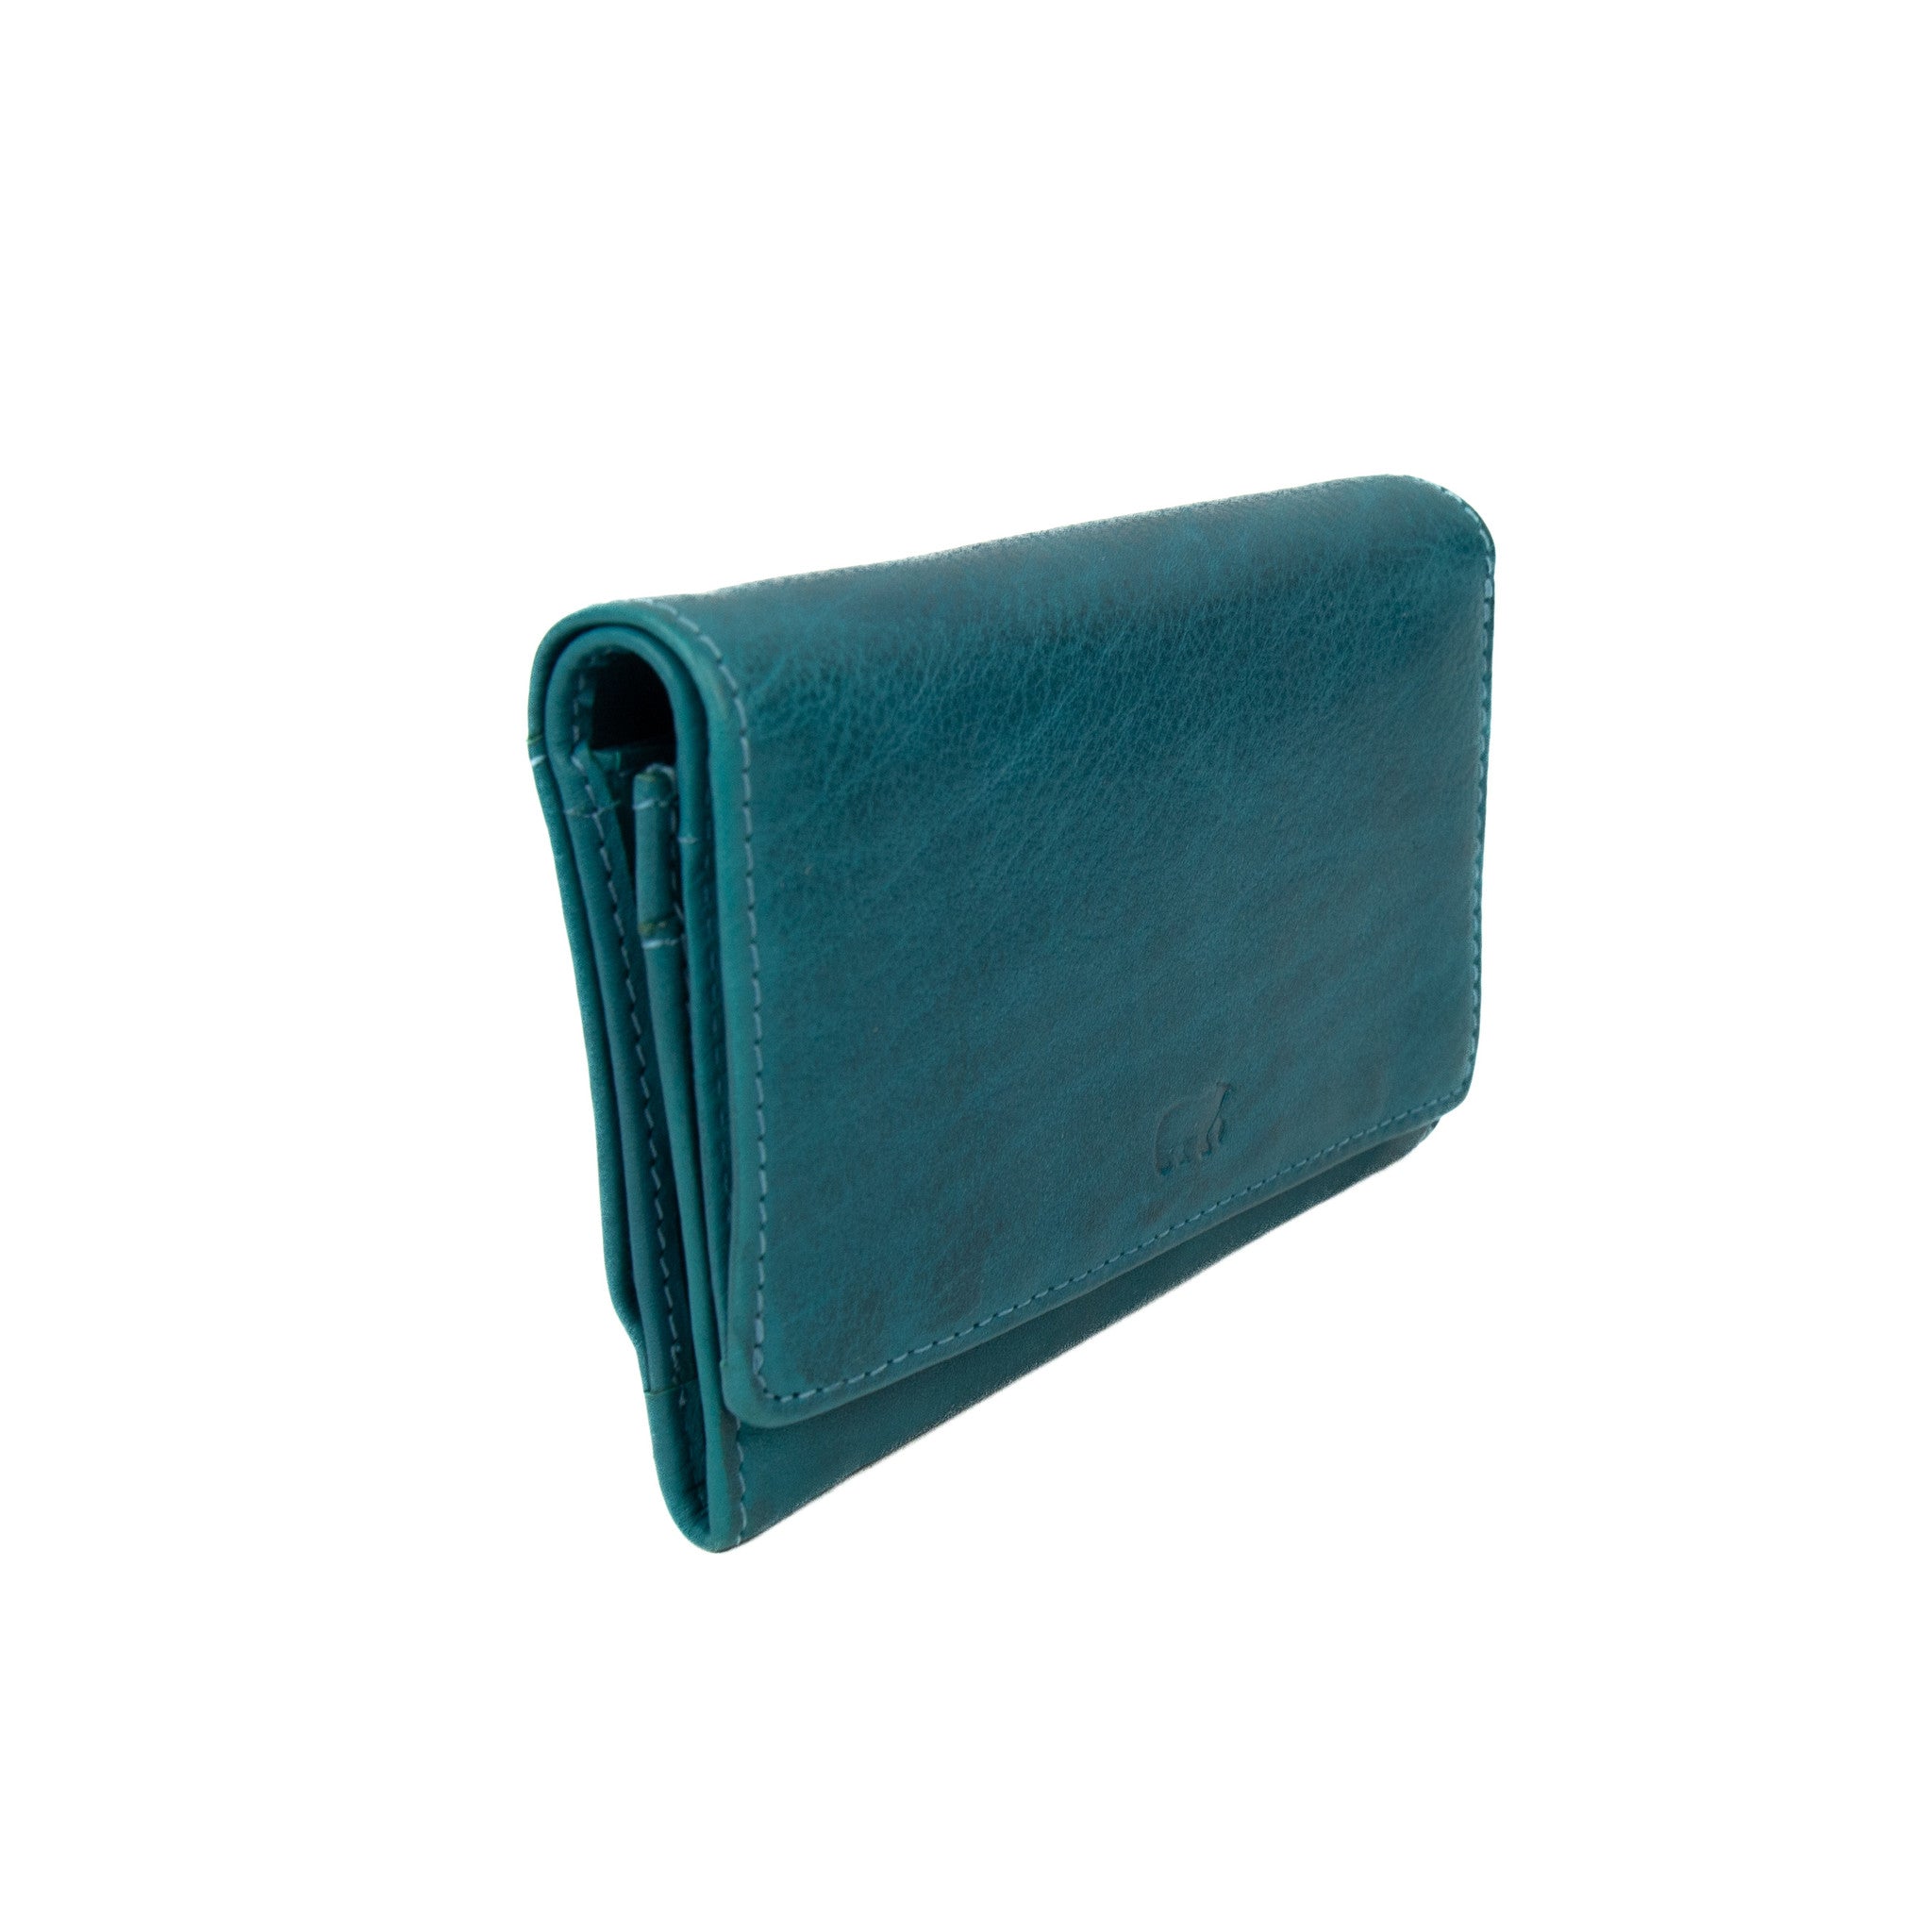 Wrap wallet 'Flappie' aqua - CL 15572